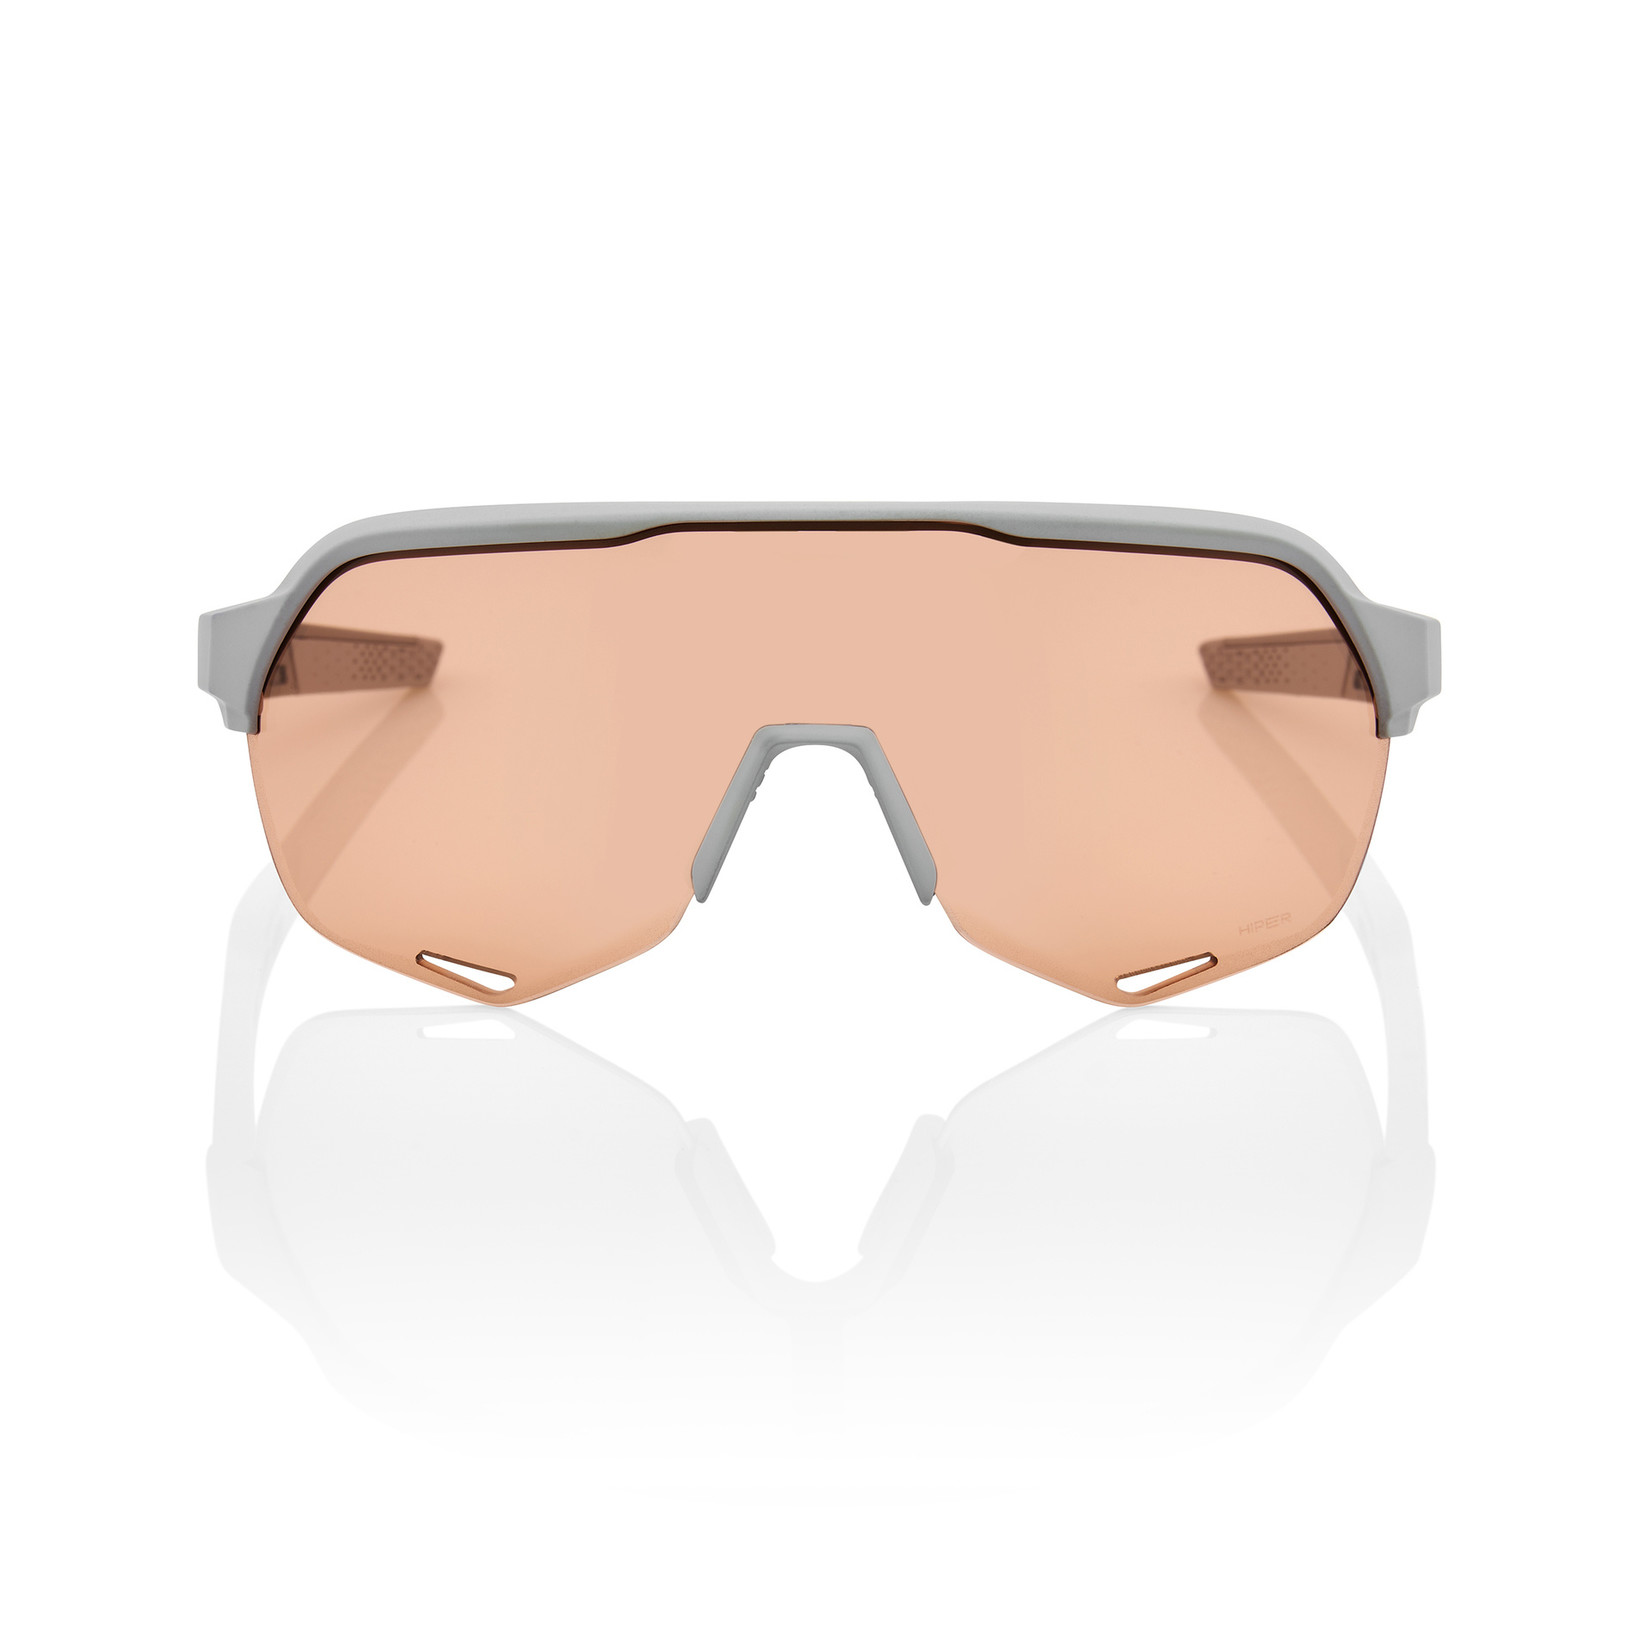 1 100% S2 Bike Sunglasses Soft Tact Stone Grey - Hiper Coral